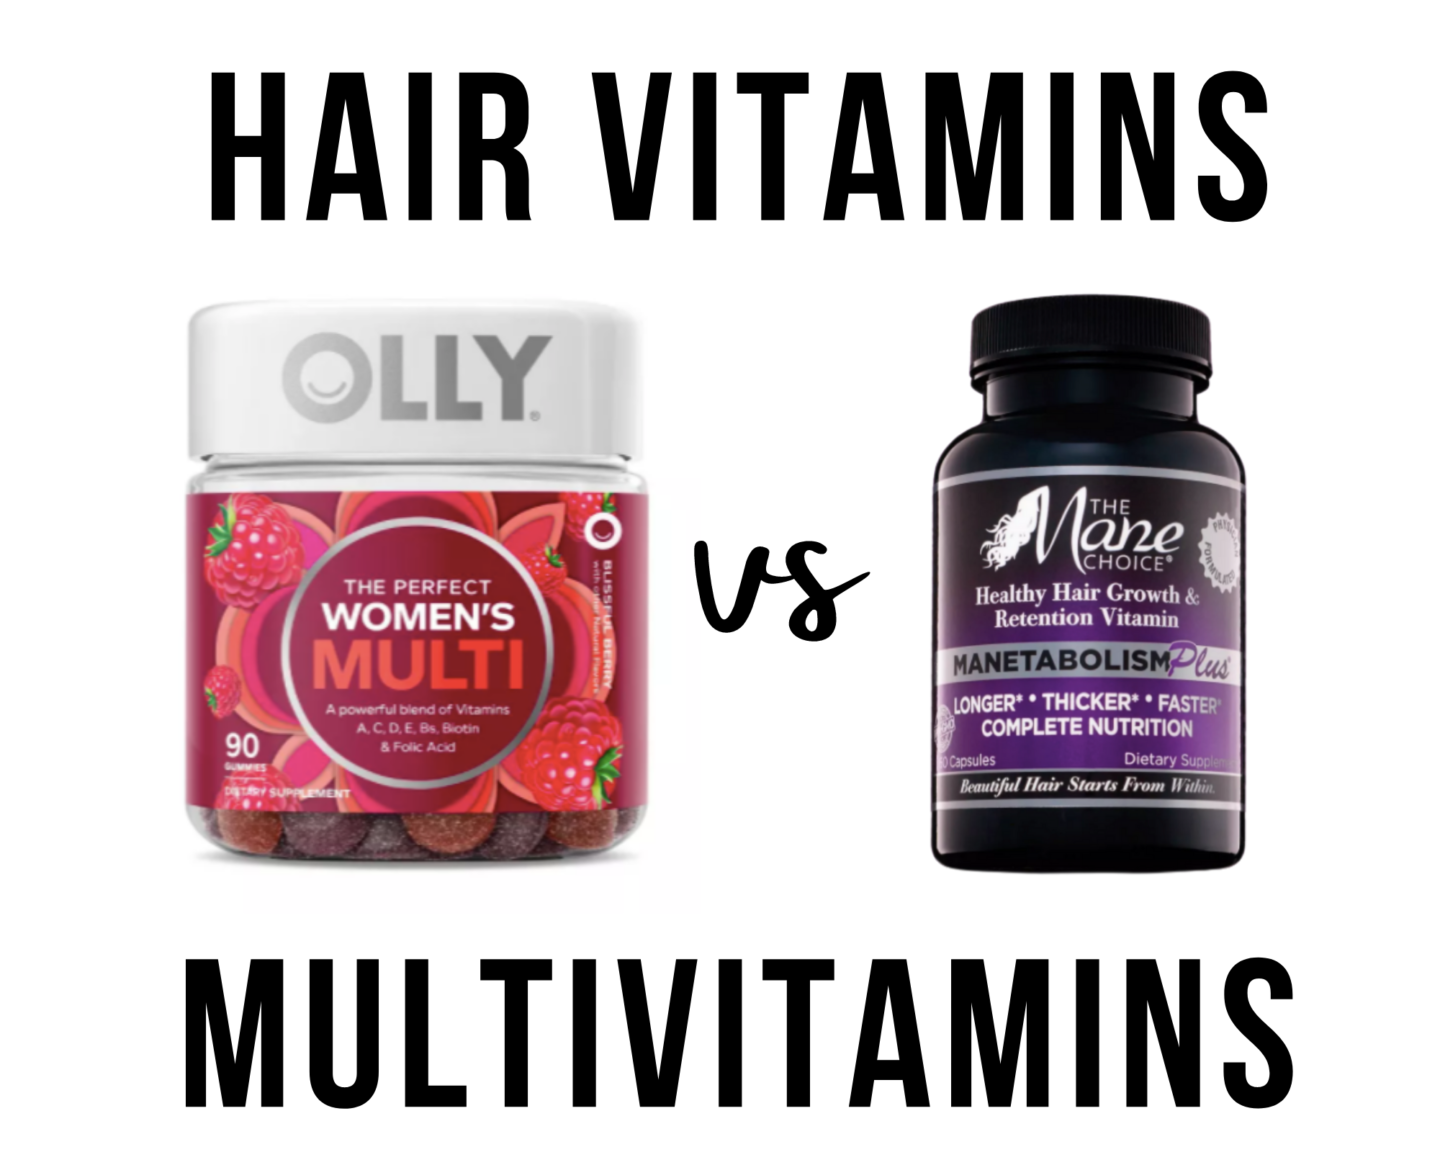 do hair vitamins really work - multivitamin vs hair vitamin